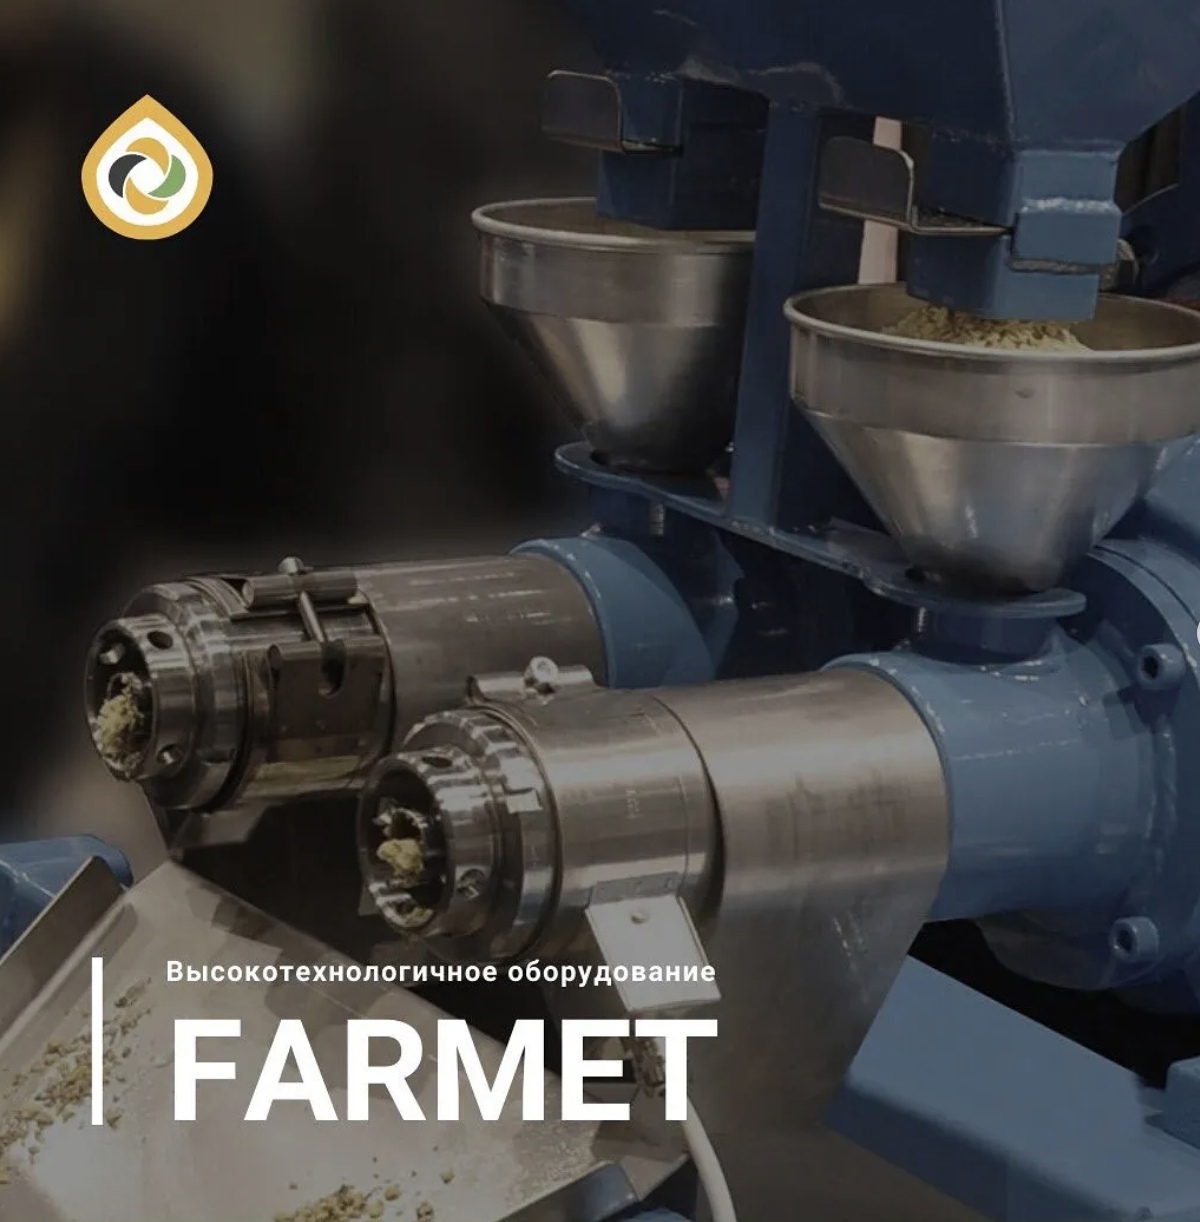 We use modern equipment Farmet A.S.